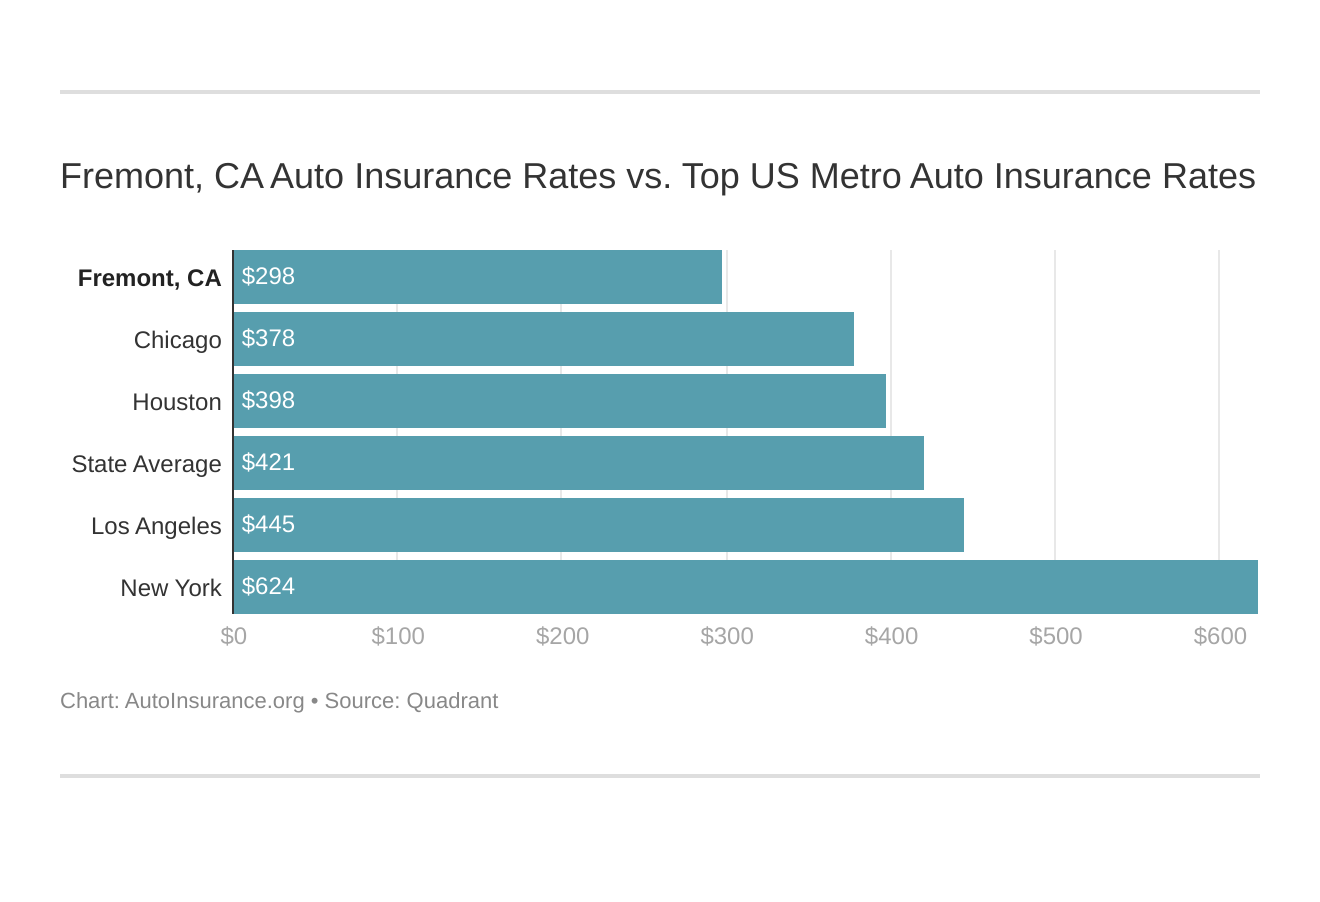 Fremont, CA Auto Insurance Rates vs. Top US Metro Auto Insurance Rates